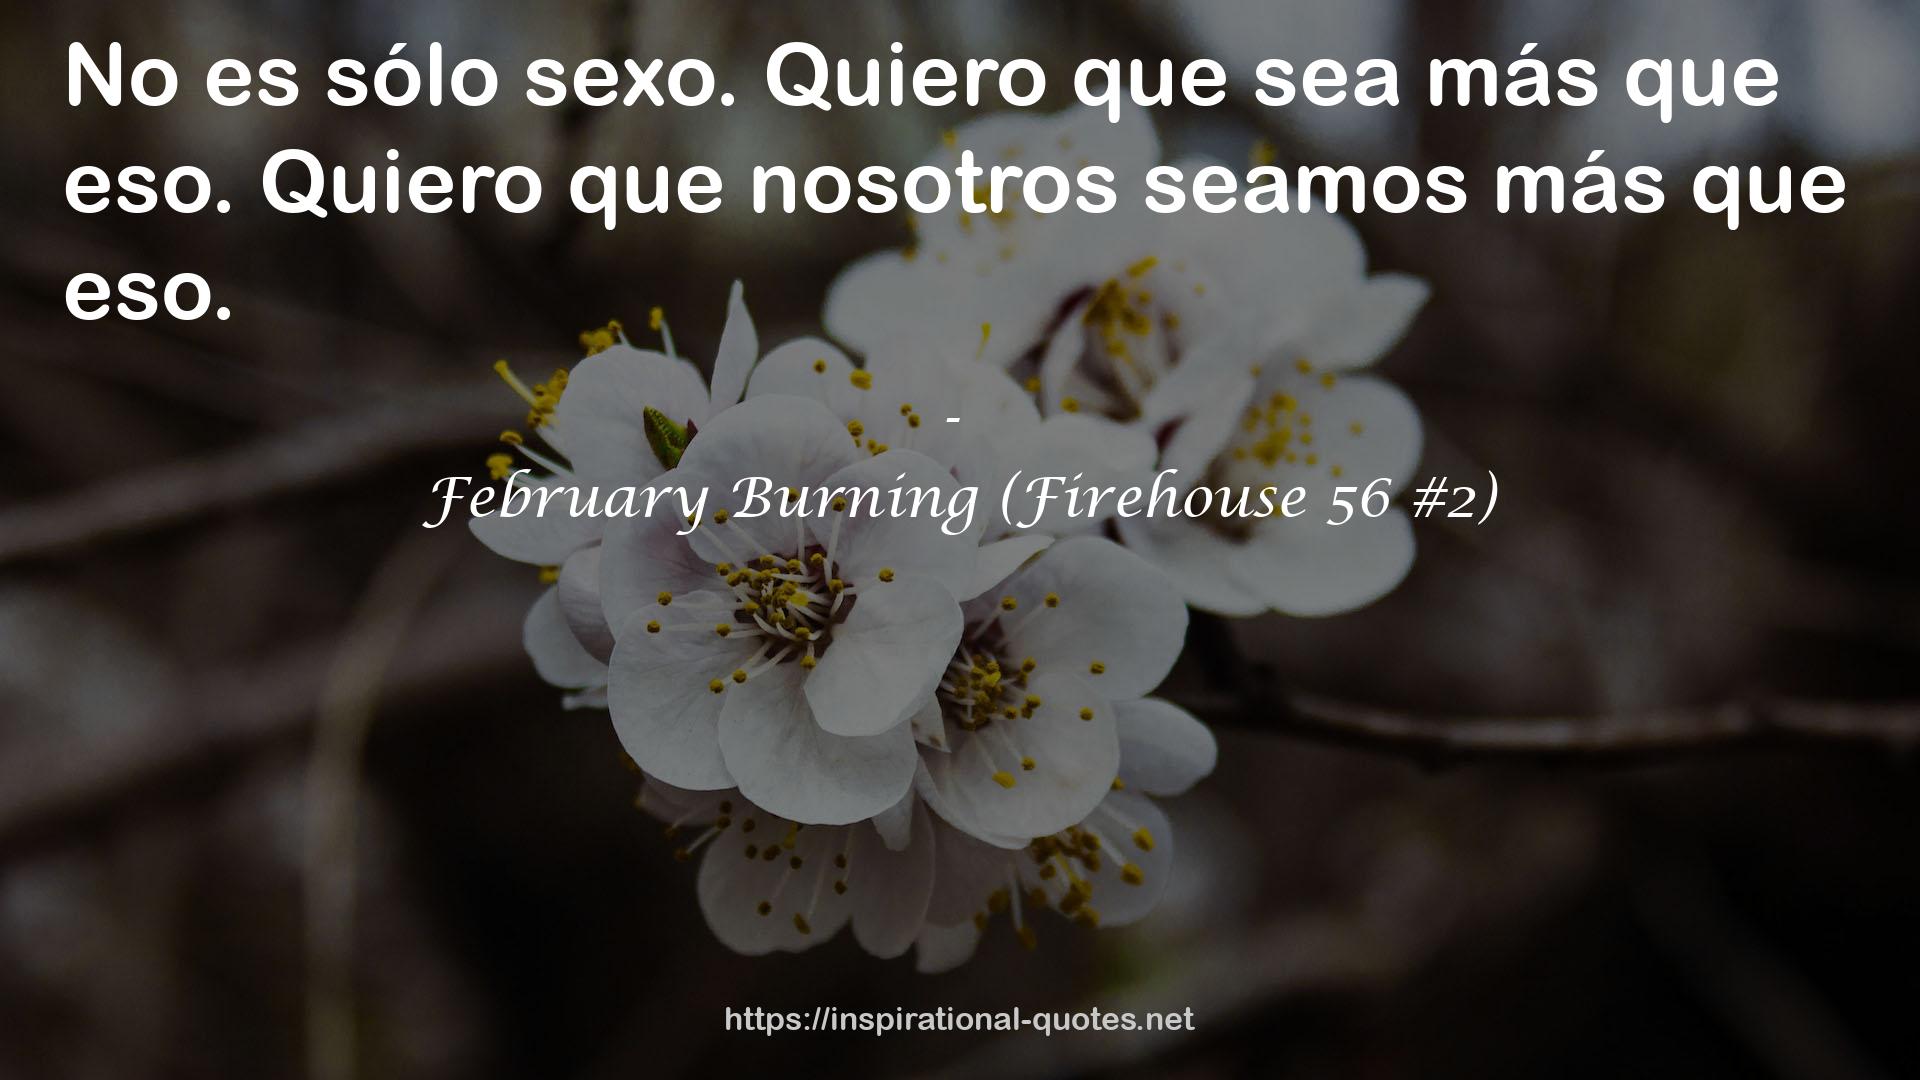 February Burning (Firehouse 56 #2) QUOTES